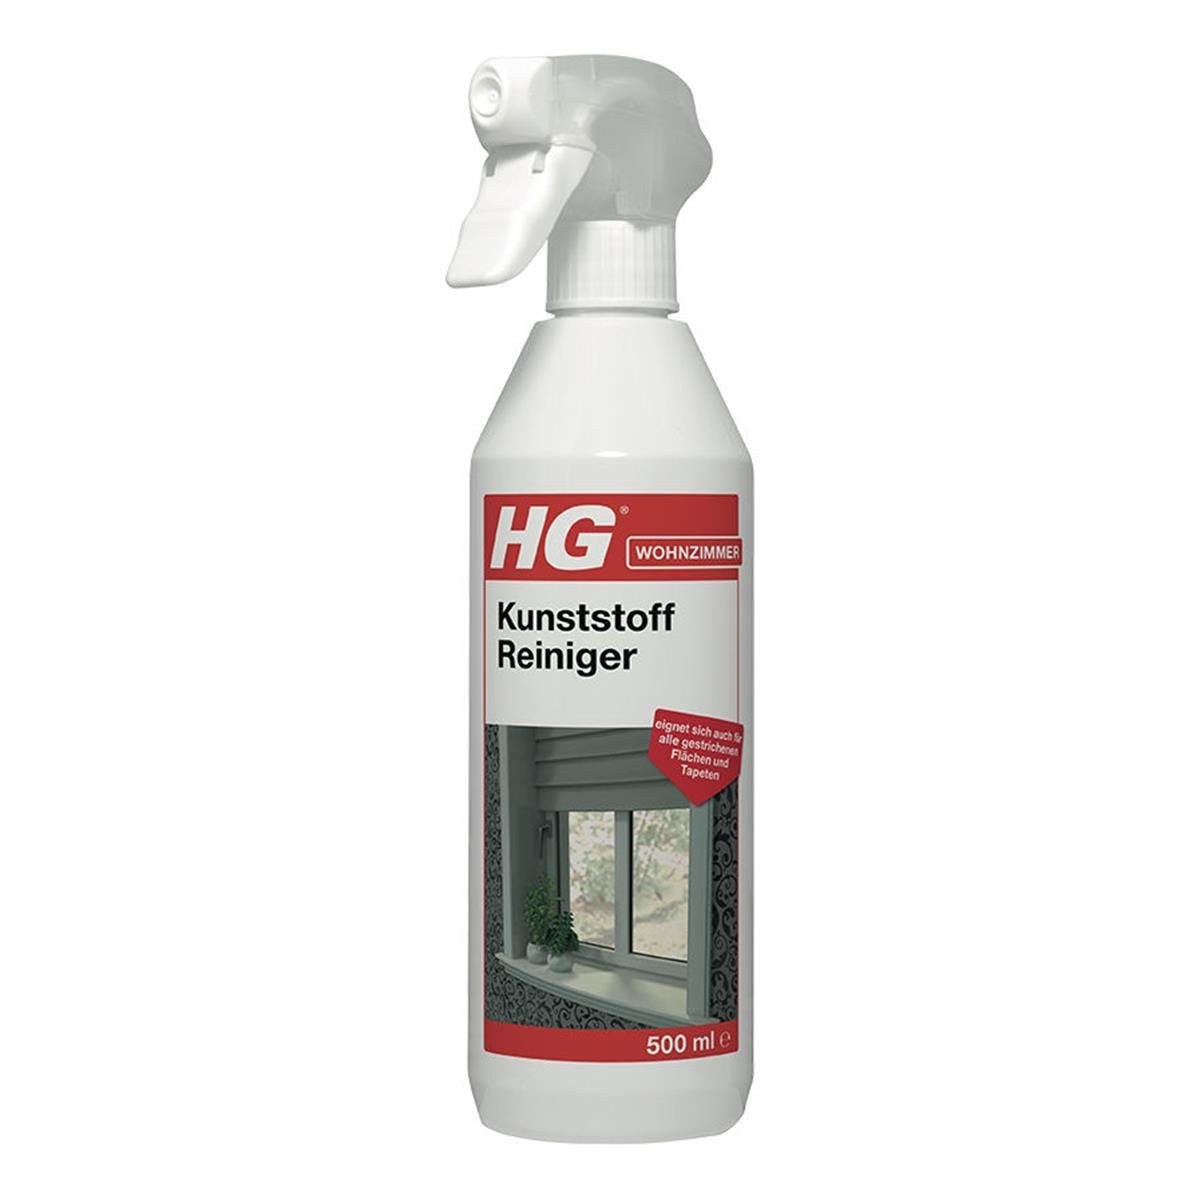 HG HG Kunststoff Reiniger 500ml – Für Kunststoffe oder Polycarbonate (1er Allzweckreiniger